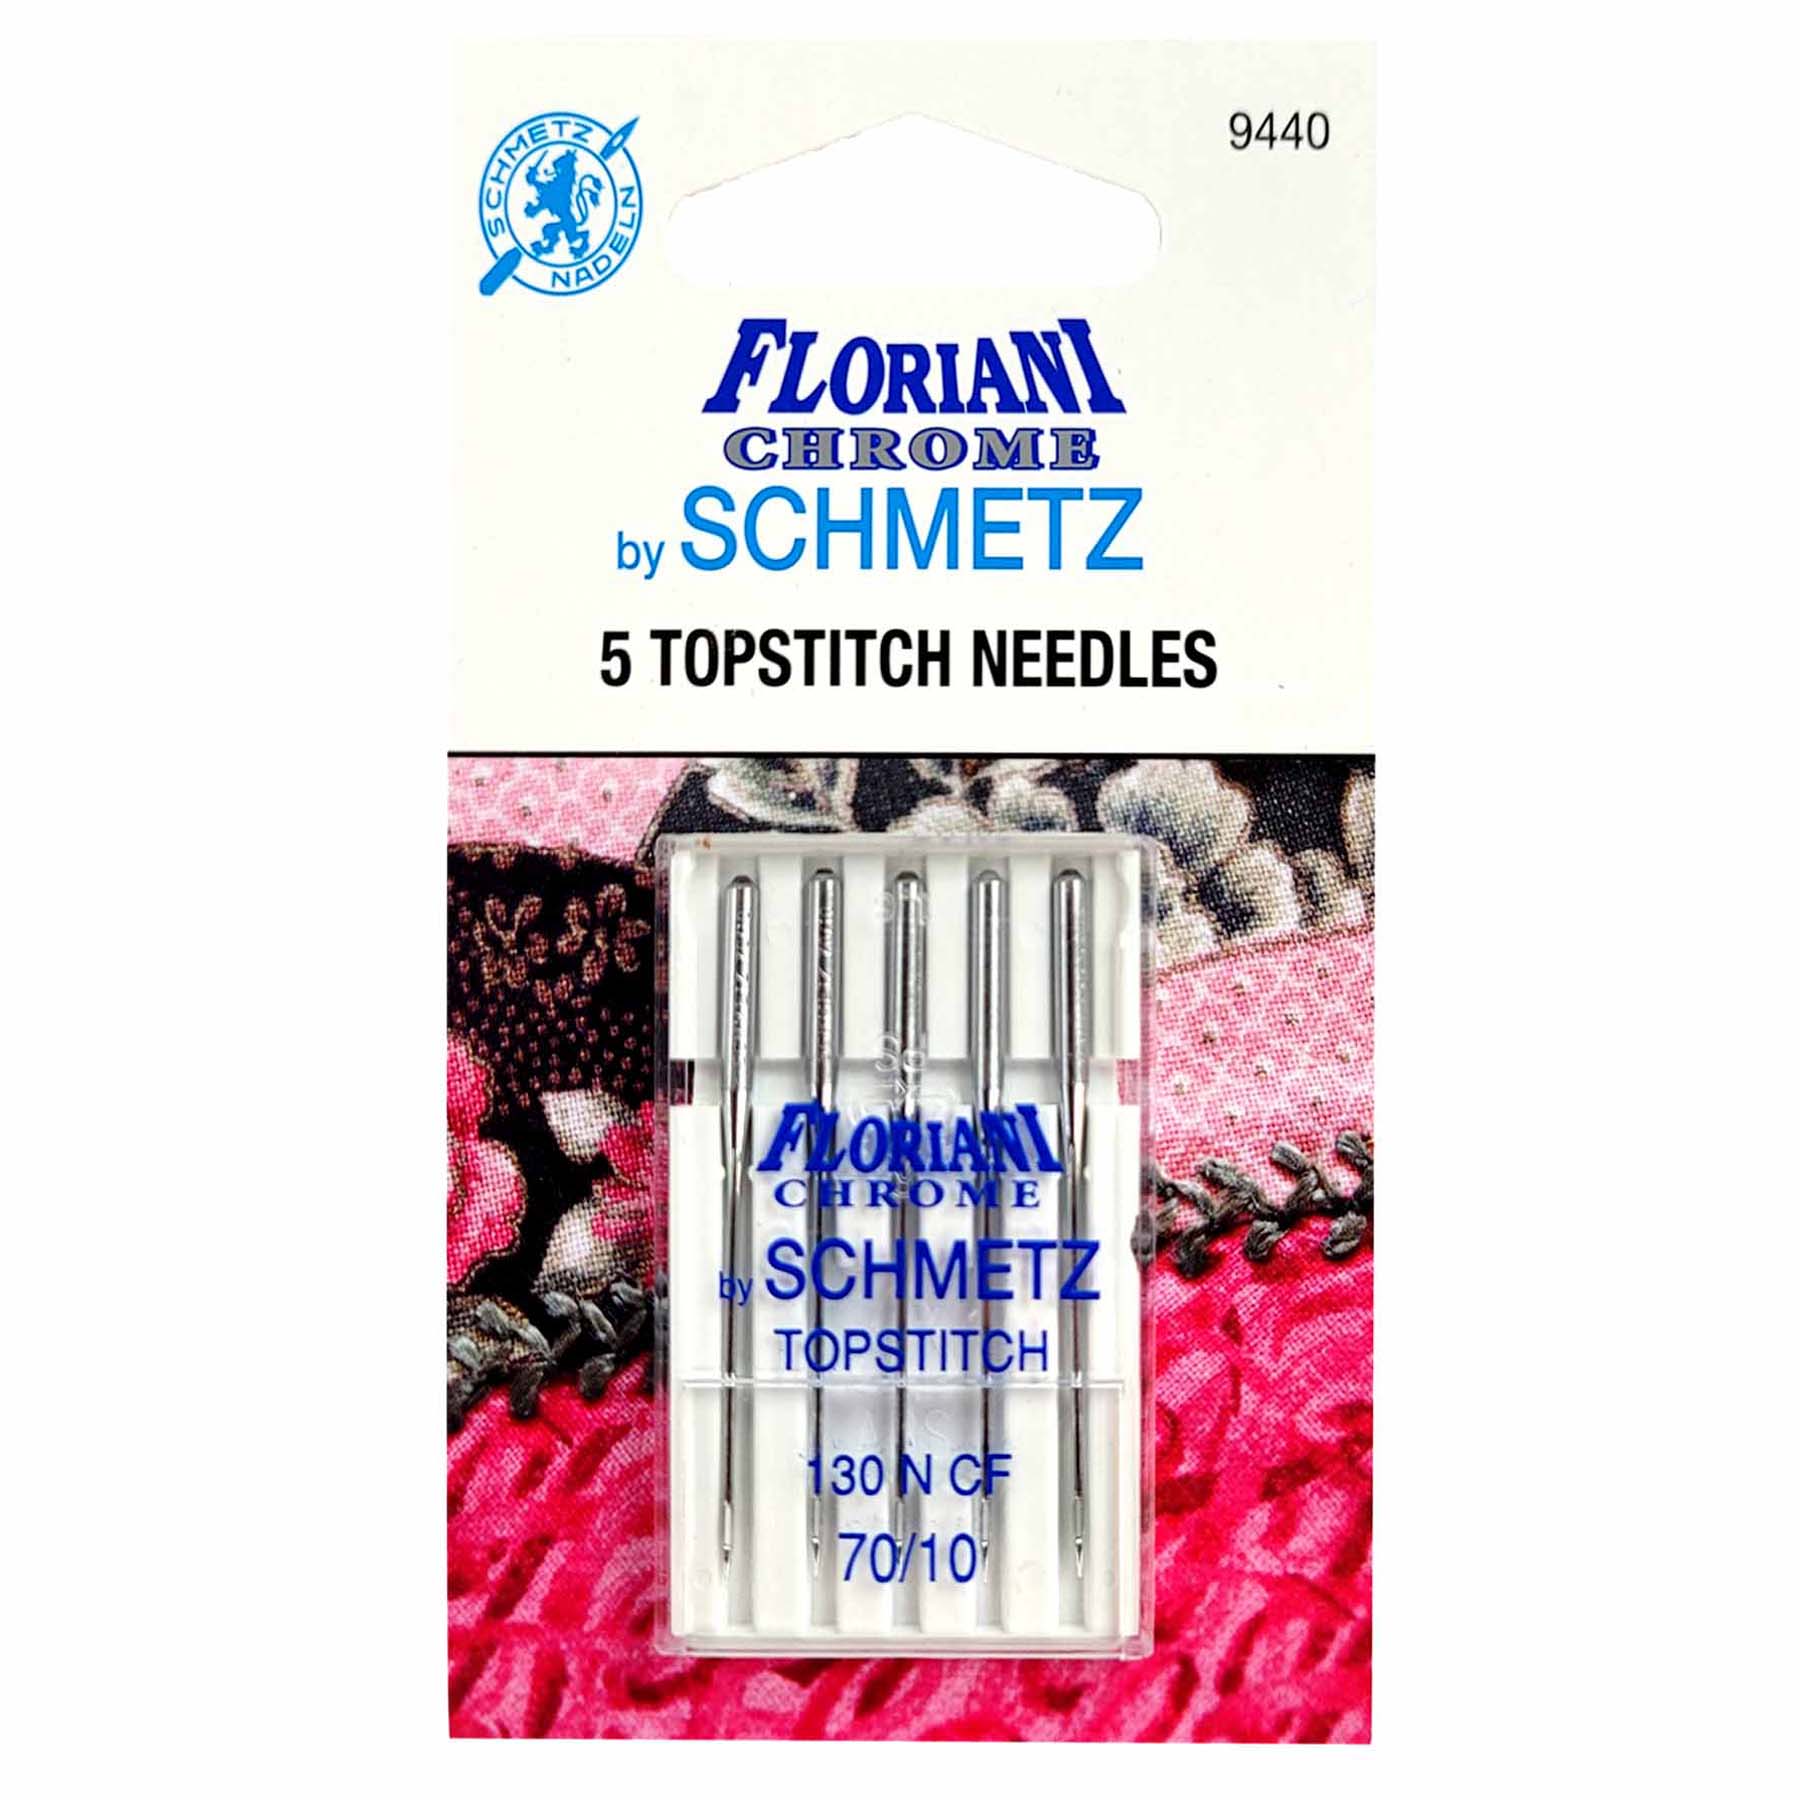 Needles, Topstitch - Floriani Chrome by Schmetz 5ct